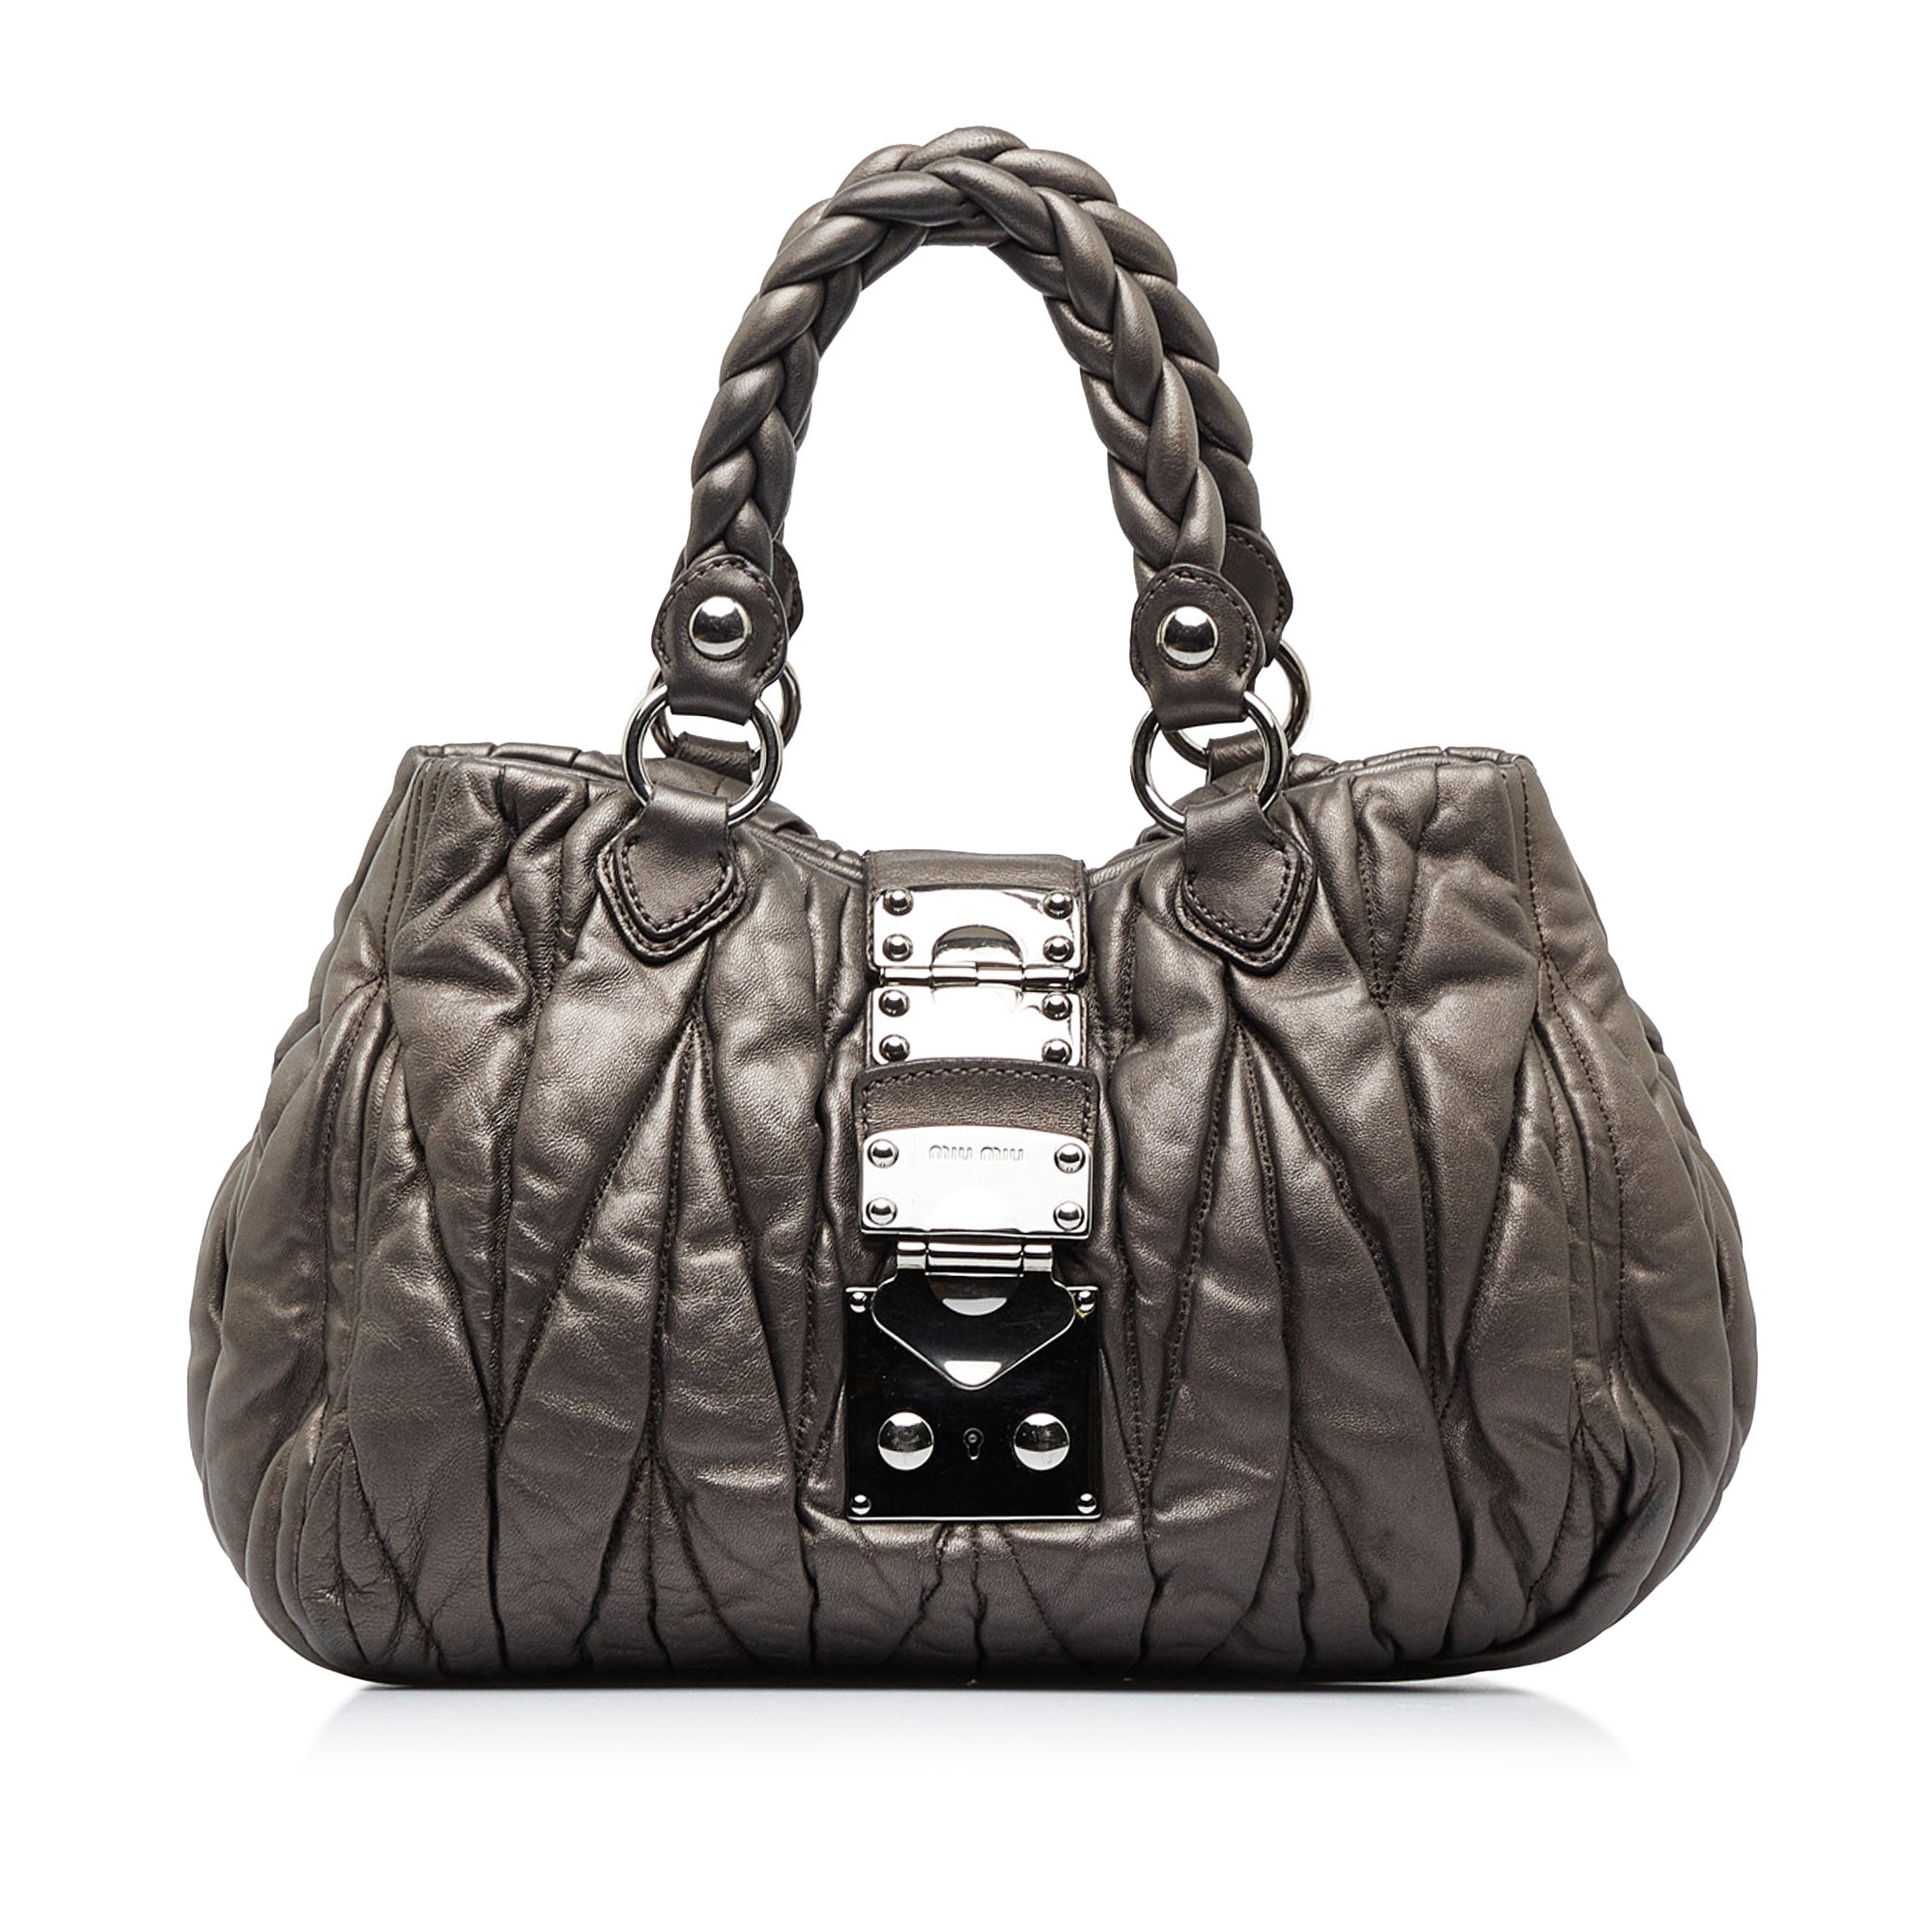 Miu Miu - Authenticated Handbag - Leather White Plain for Women, Never Worn